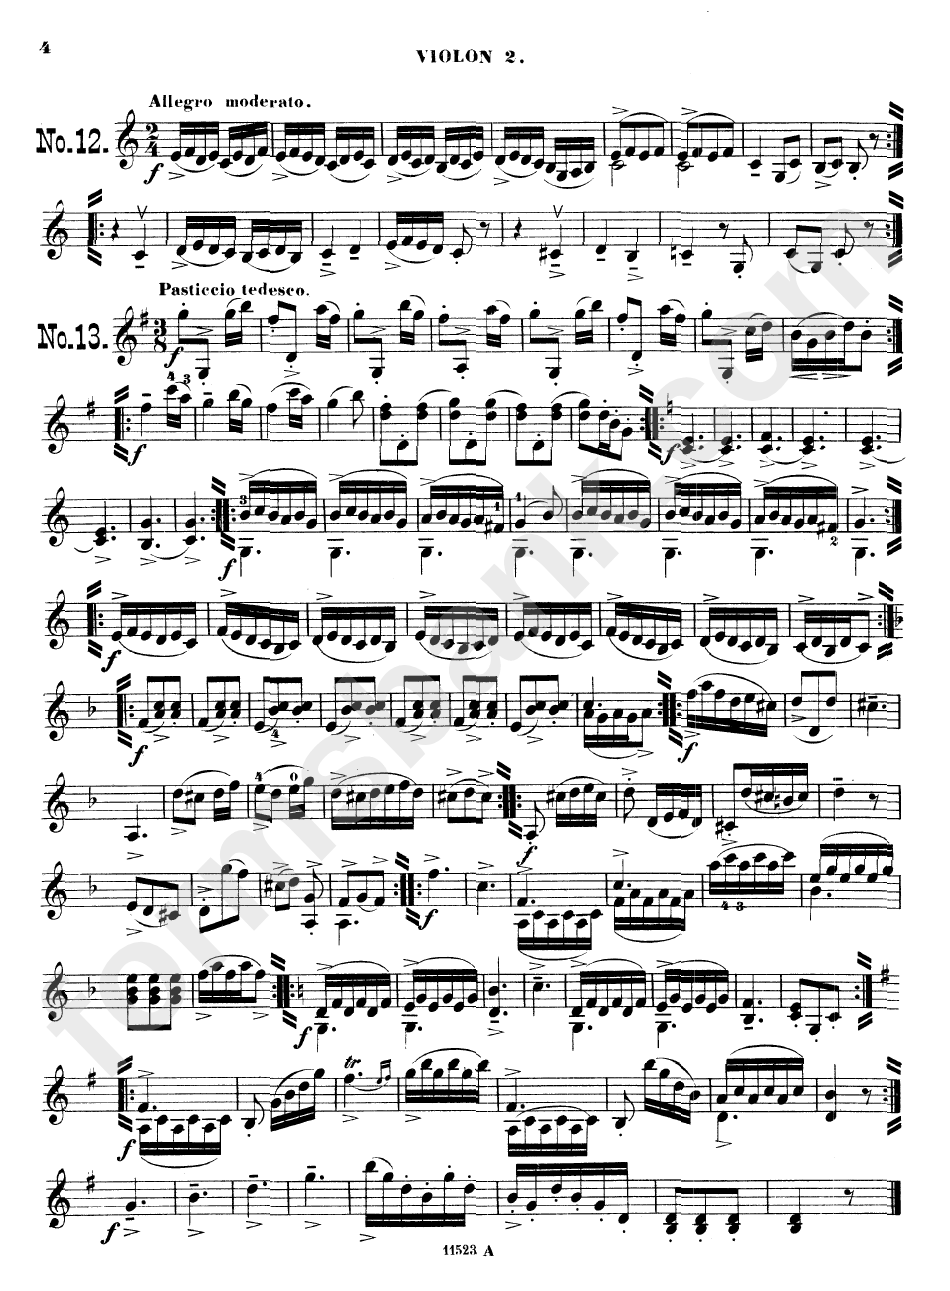 101 Pieces Faciles Et Progressives Violin Sheet Music